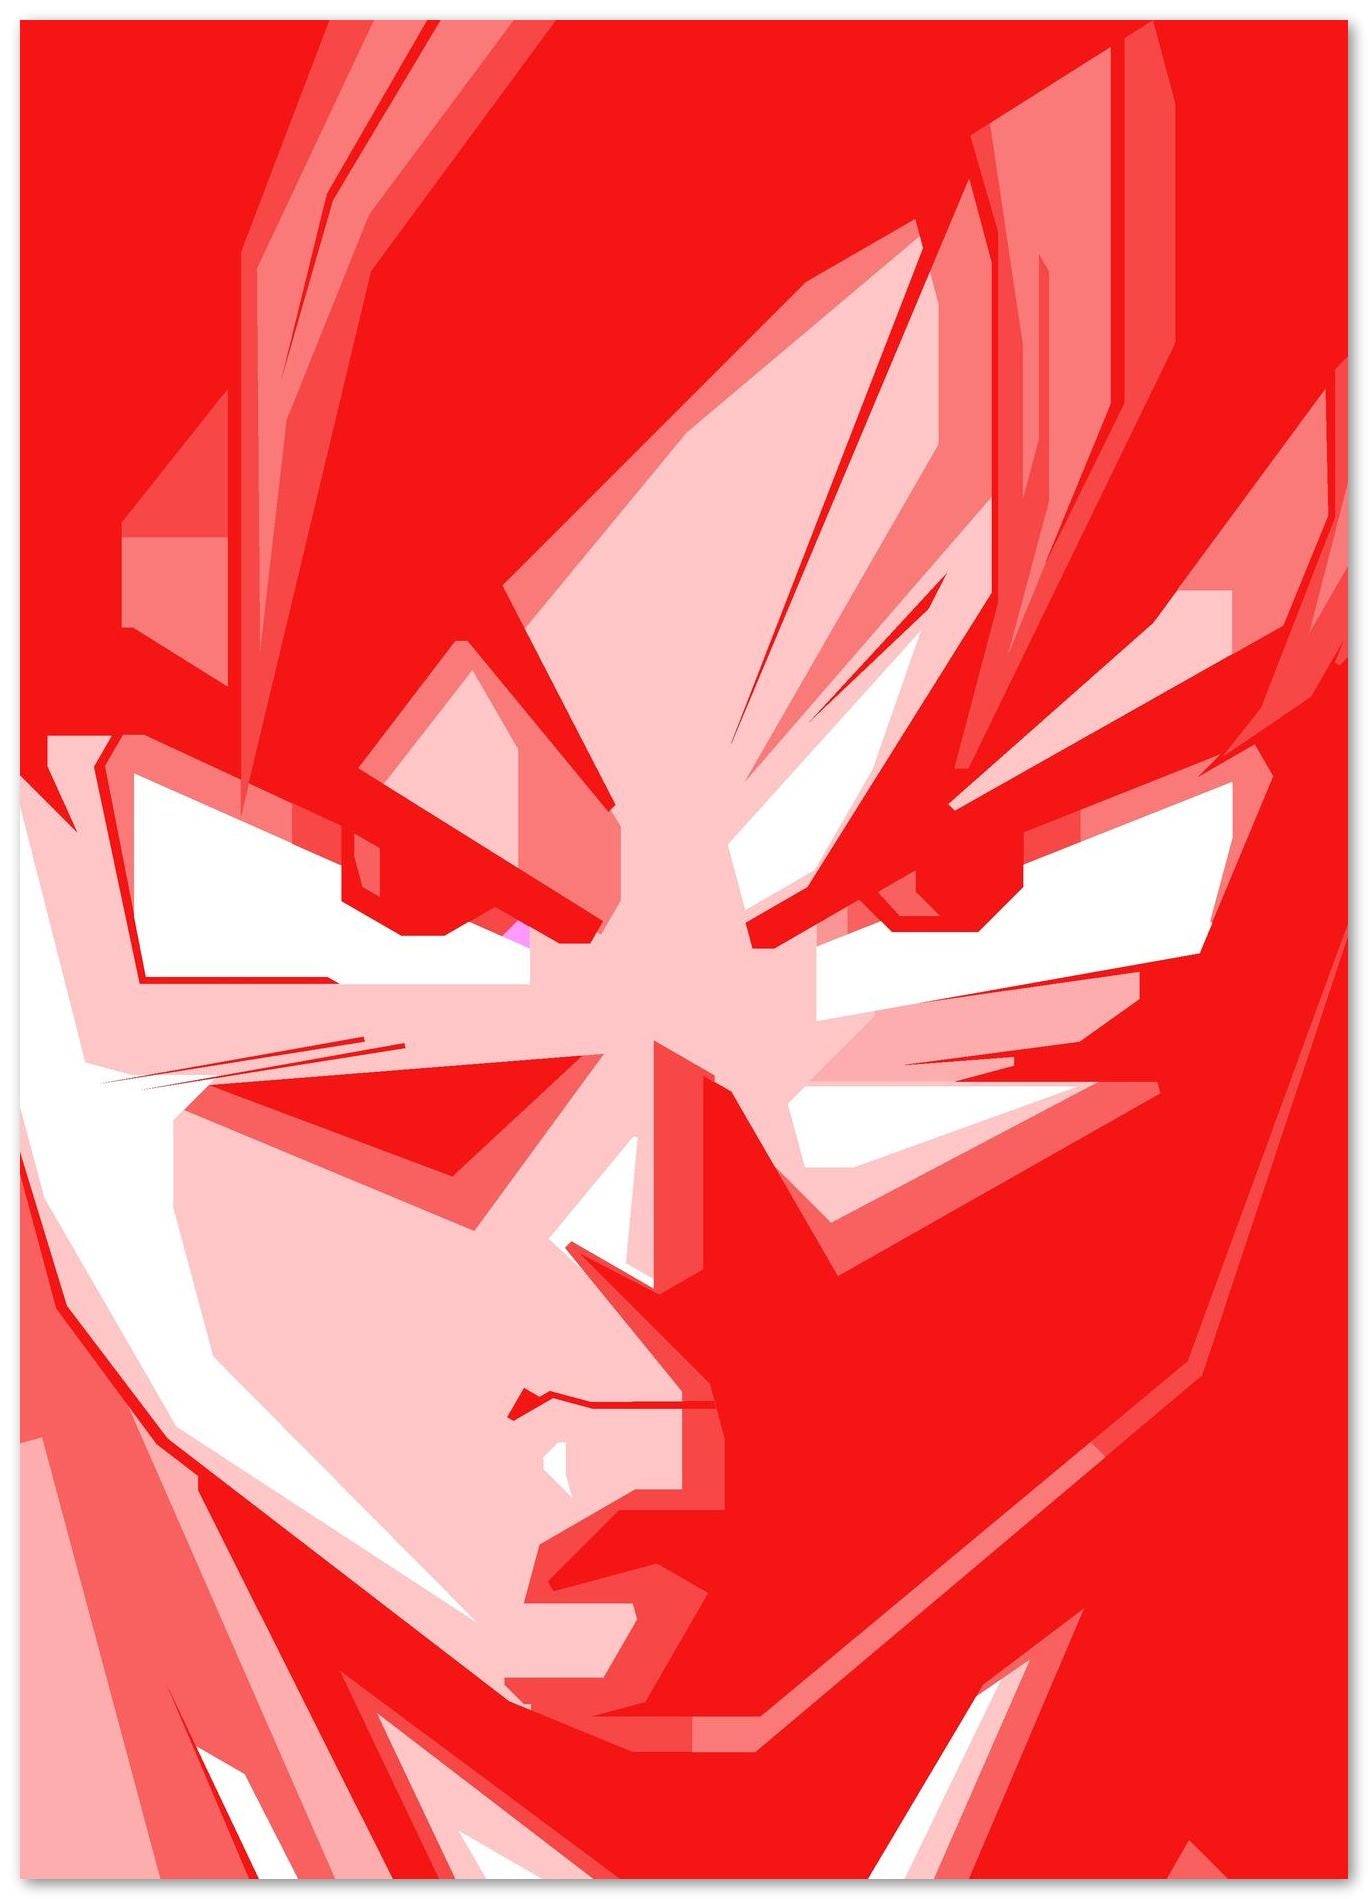 Son Goku in Monochrome Red - @WPAPbyiant